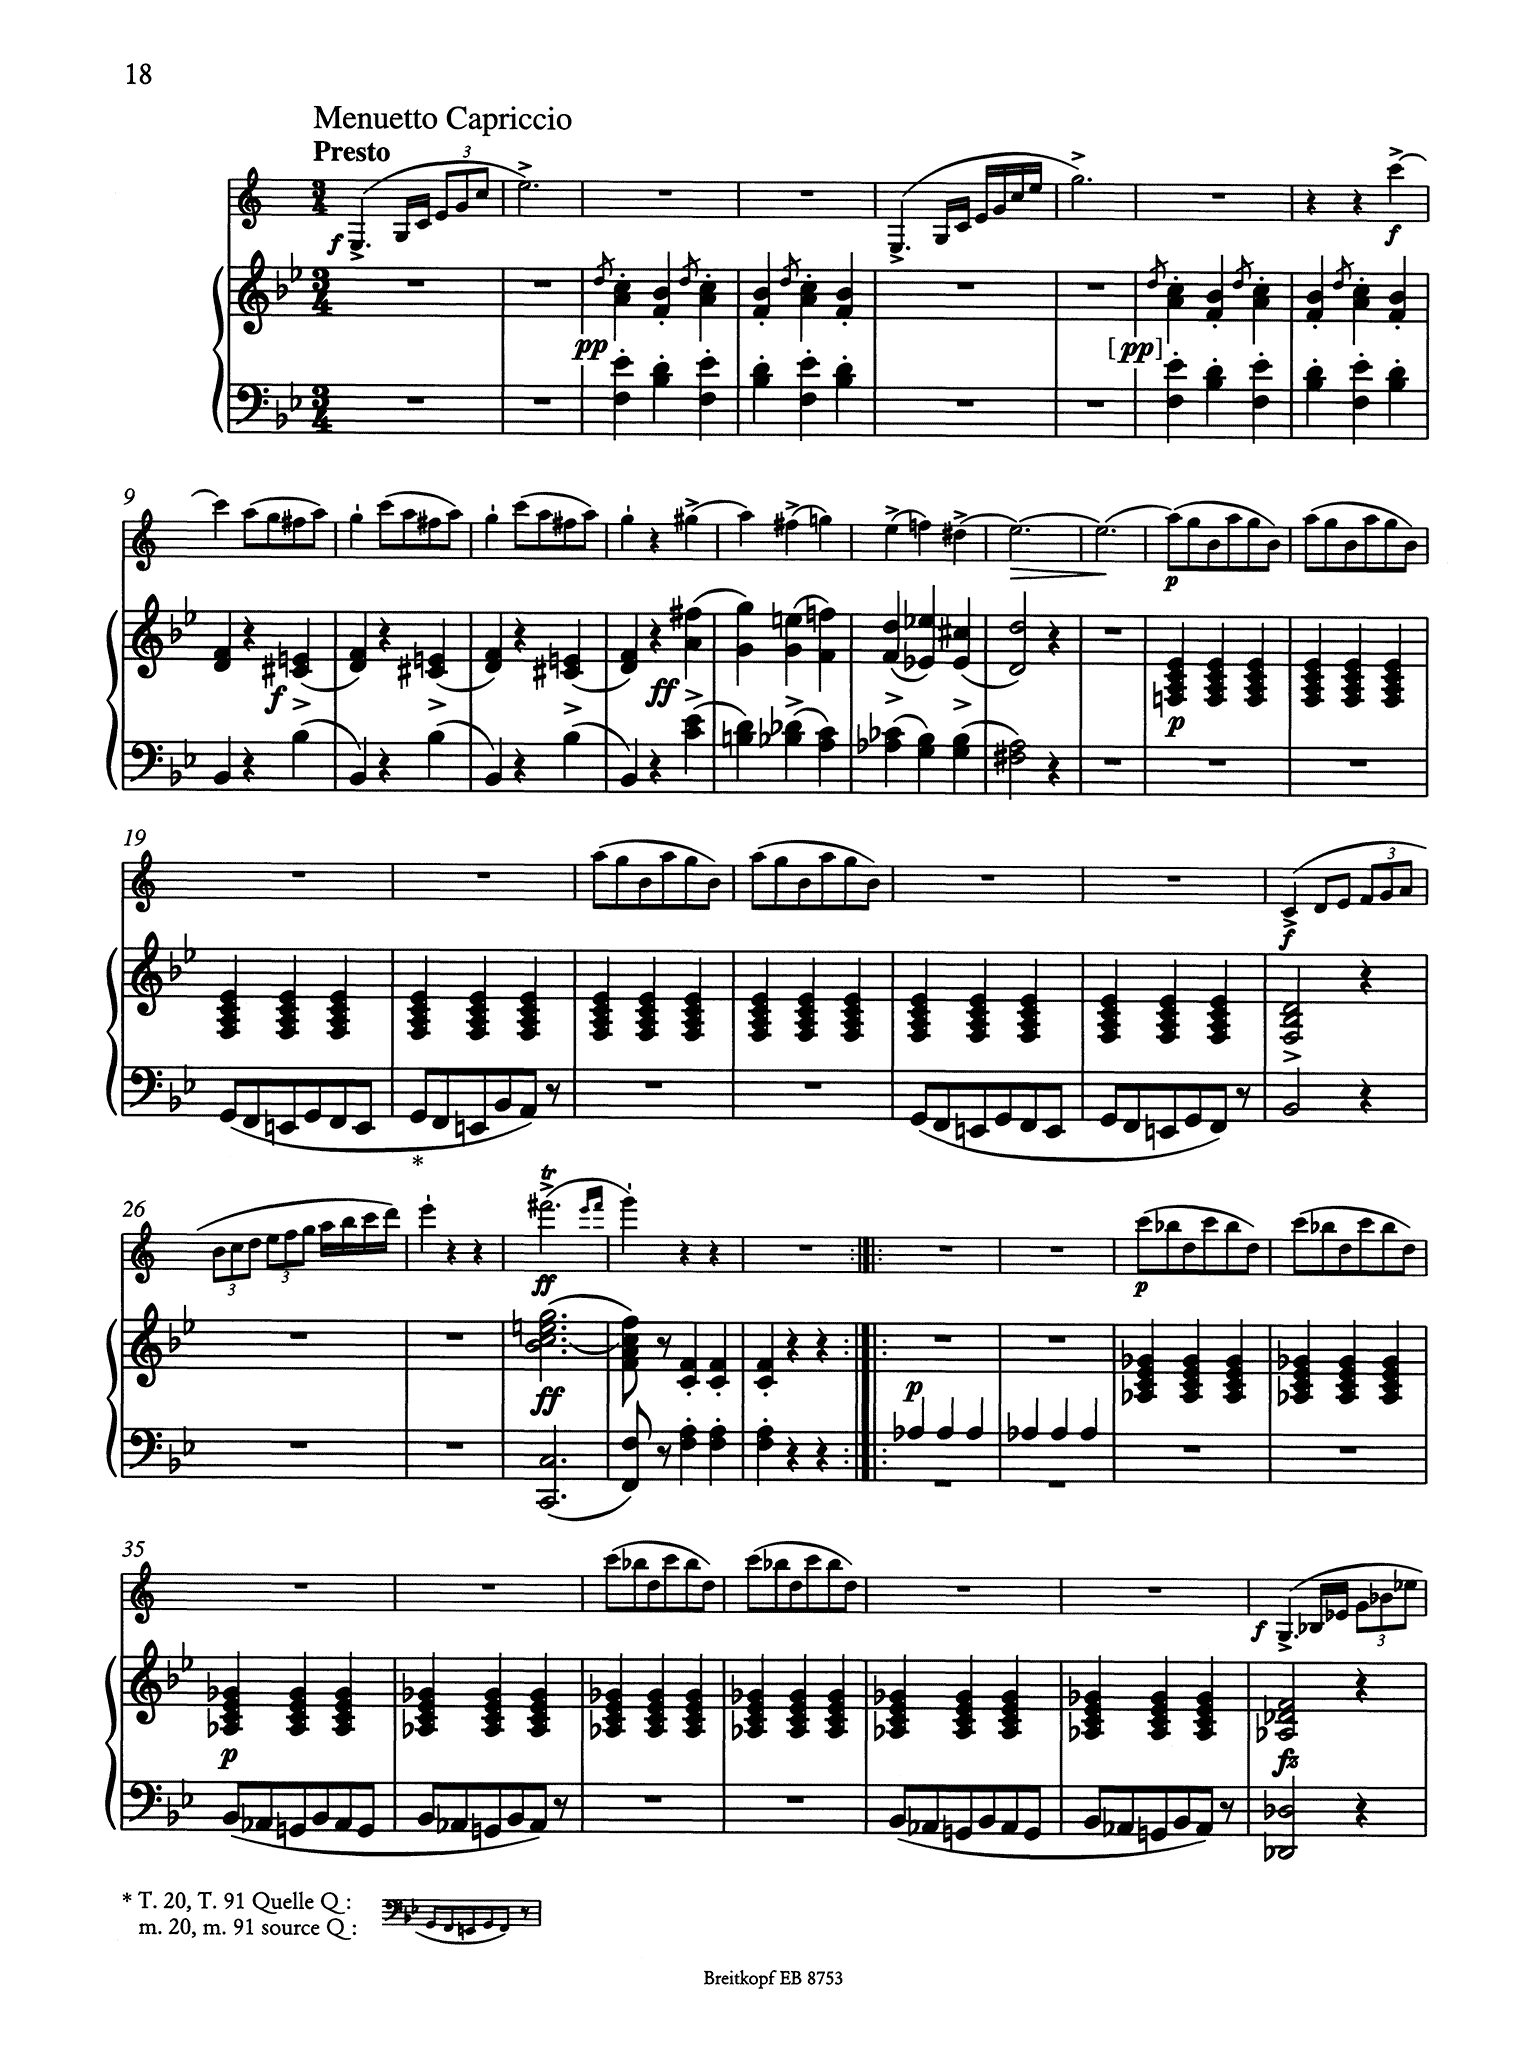 Clarinet Quintet, Op. 34 Piano reduction - Movement 3